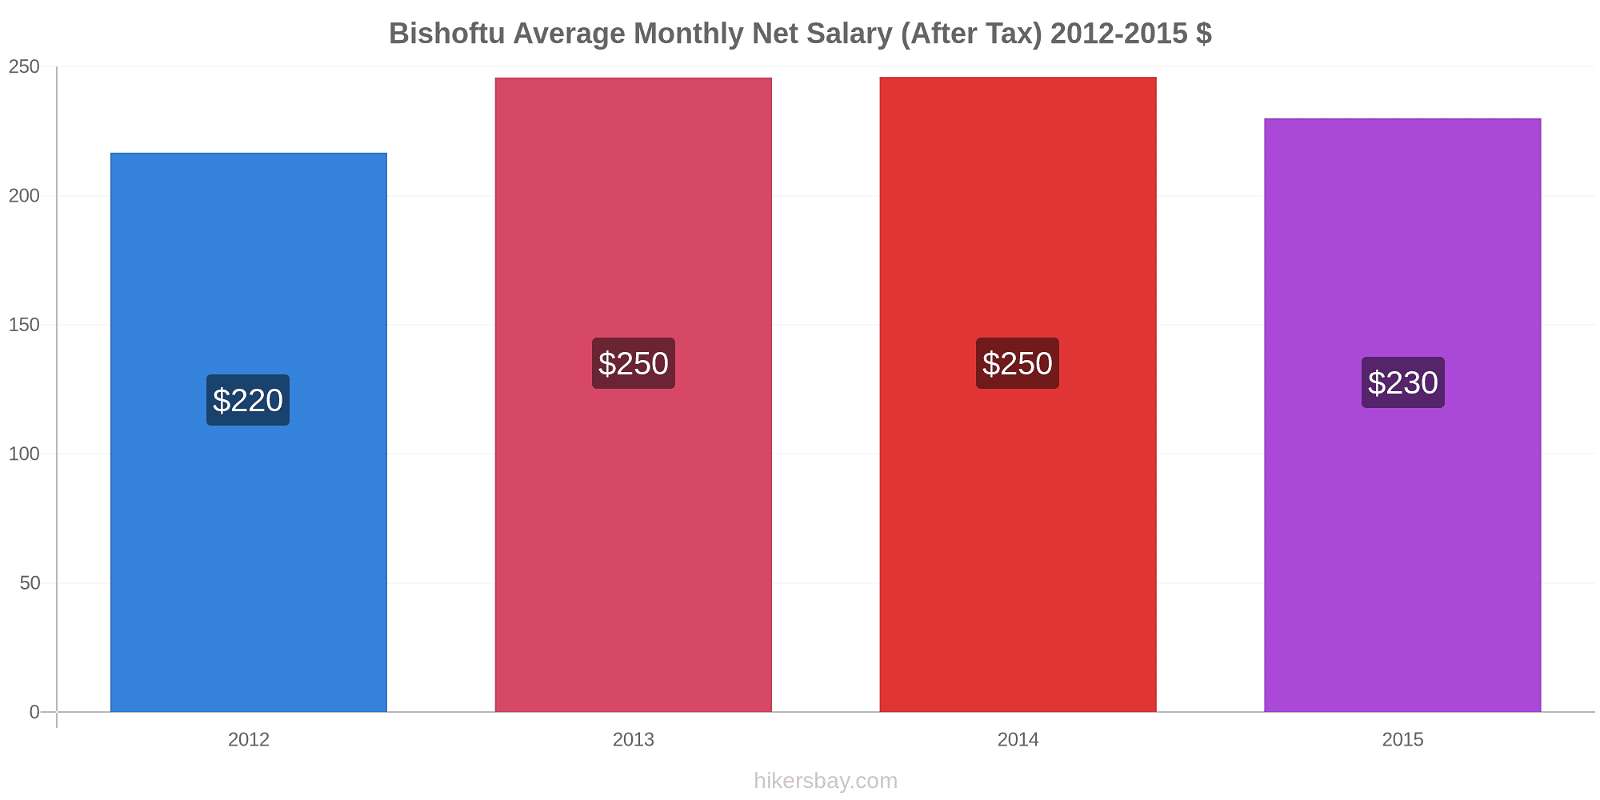 Bishoftu price changes Average Monthly Net Salary (After Tax) hikersbay.com